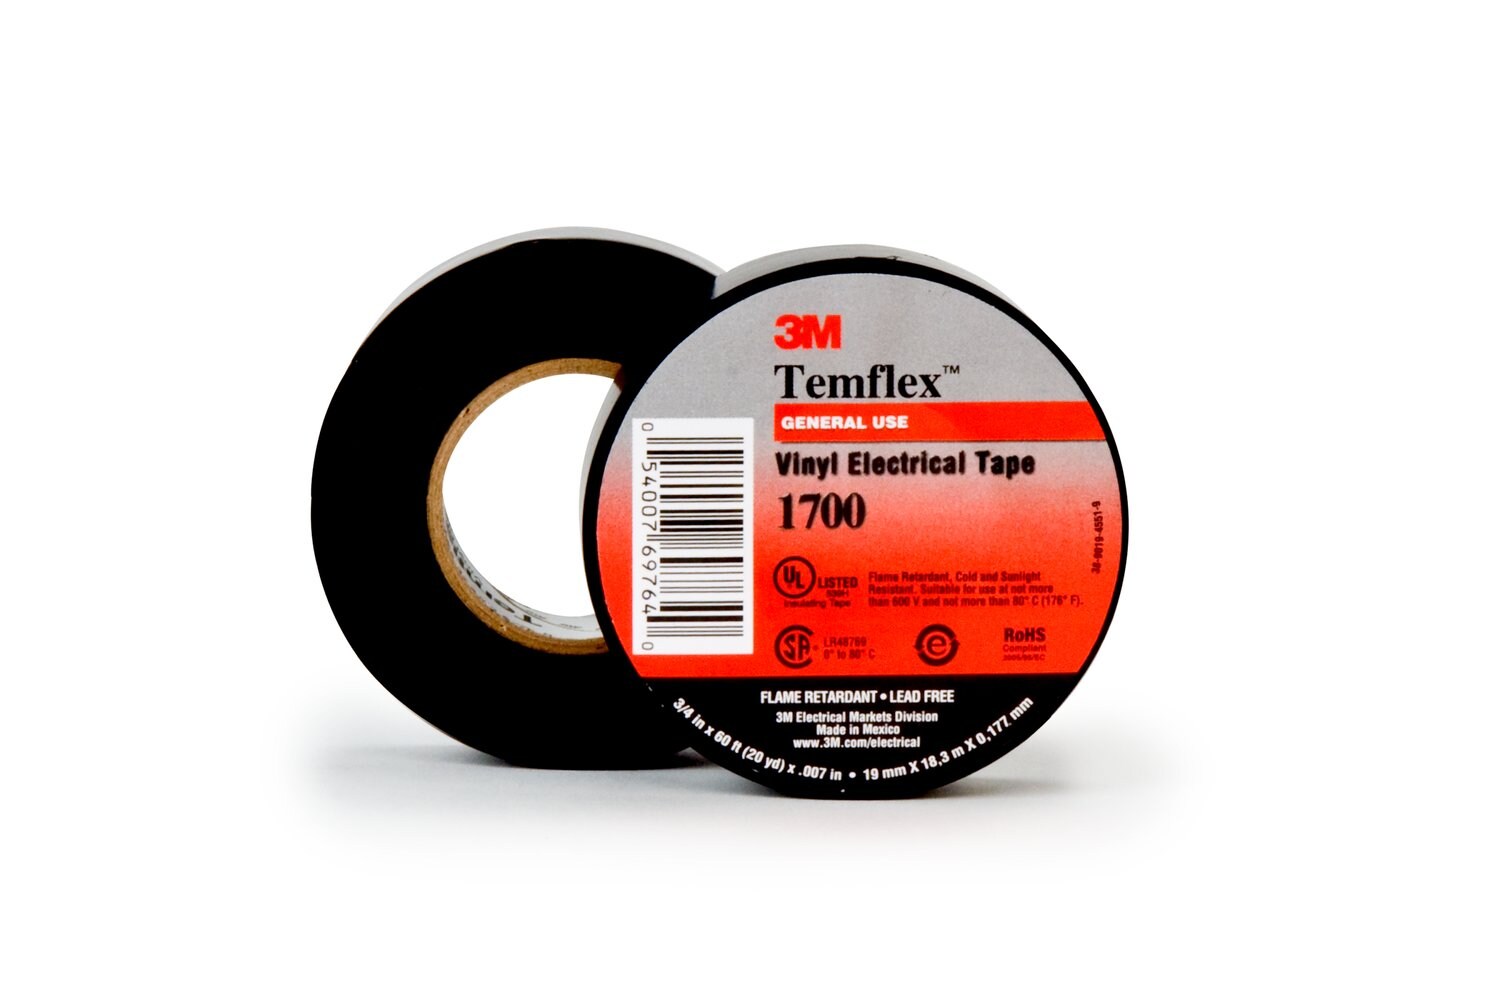 7100098124 - 3M Temflex Vinyl Electrical Tape 1700, Configurable